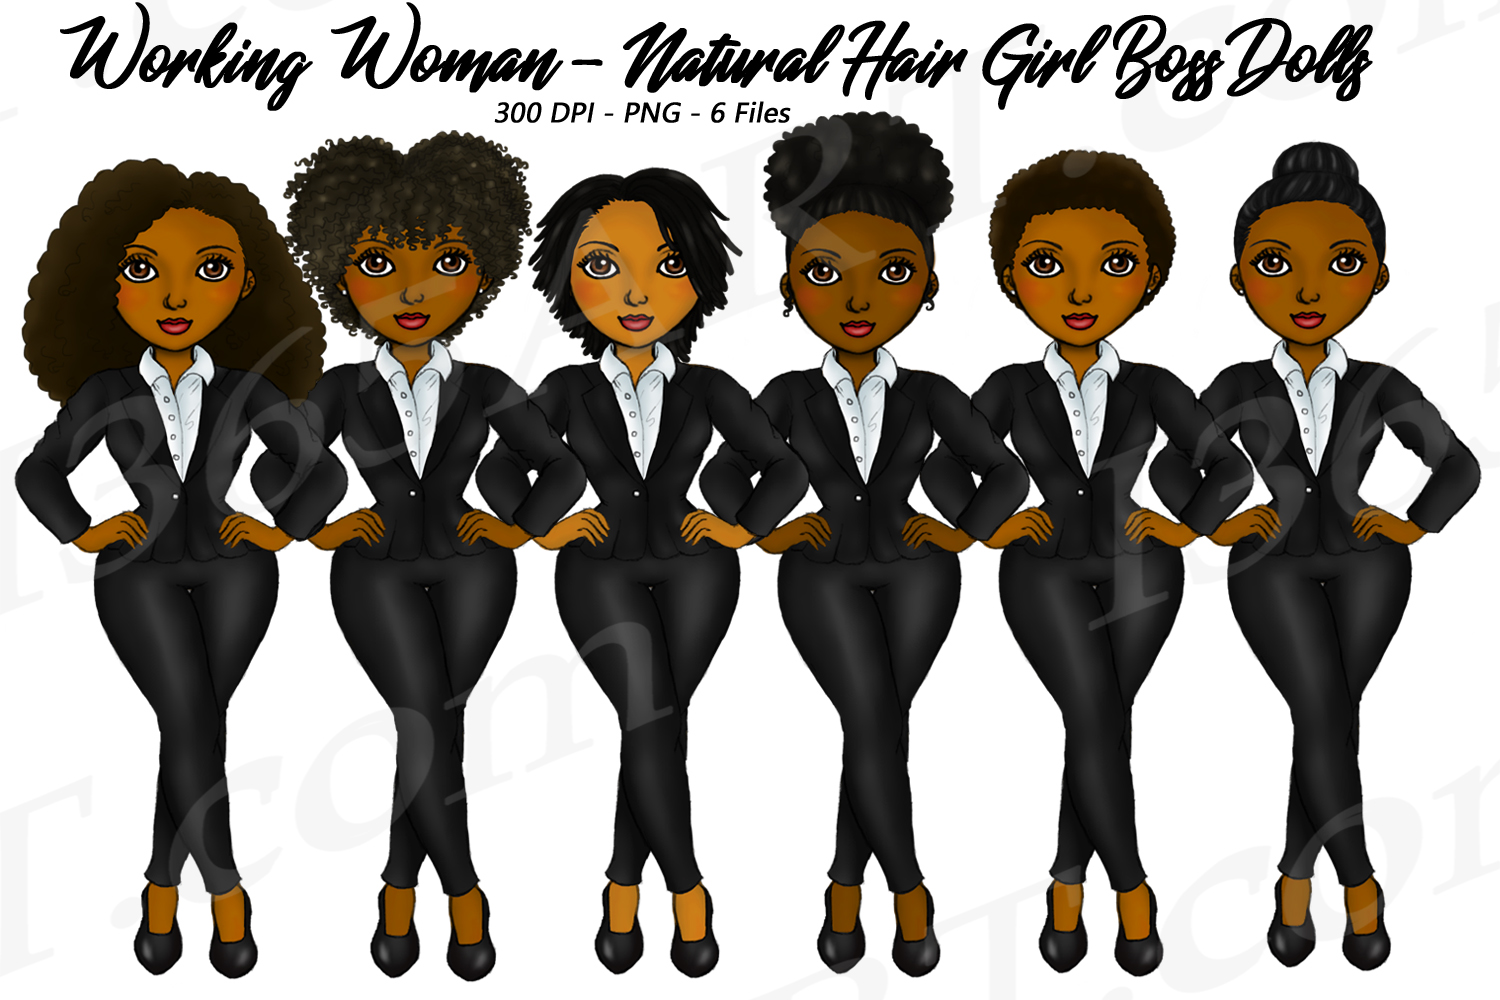 Working Woman Fashion Clipart, Black Girls, NaturalHair.